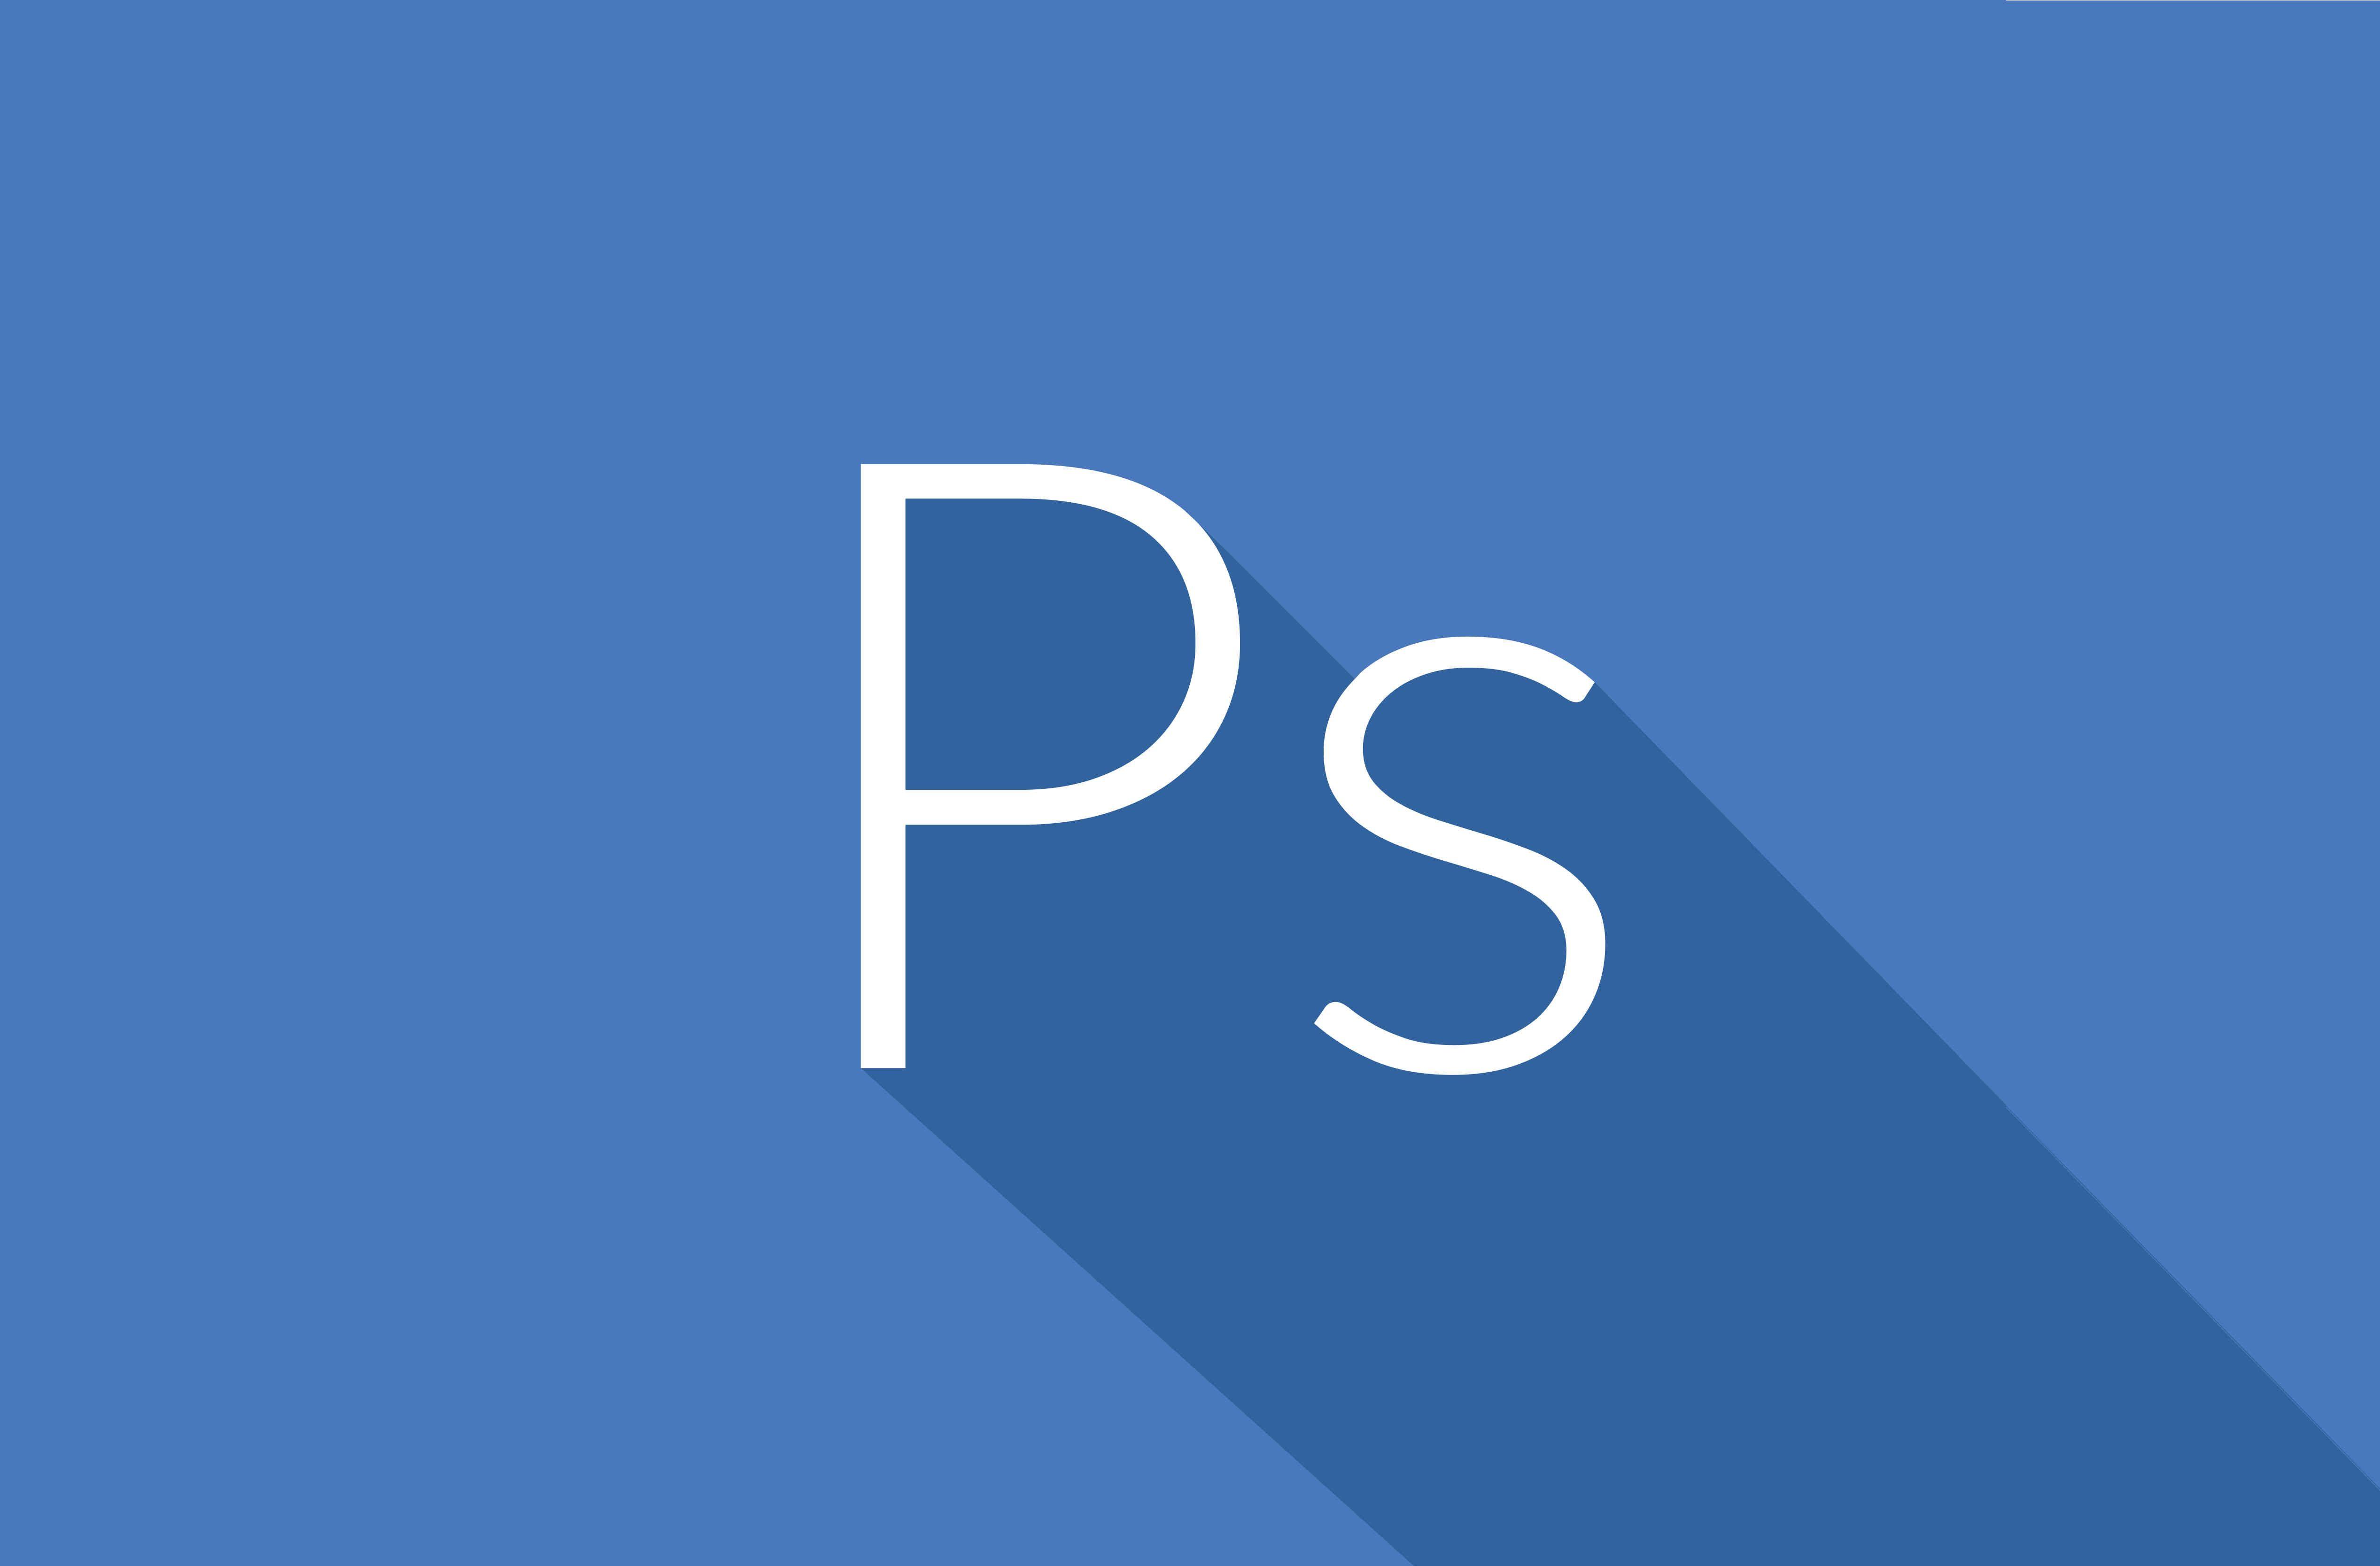 PS6 Logo - Photoshop Blend Modes Explained - Photo Blog Stop